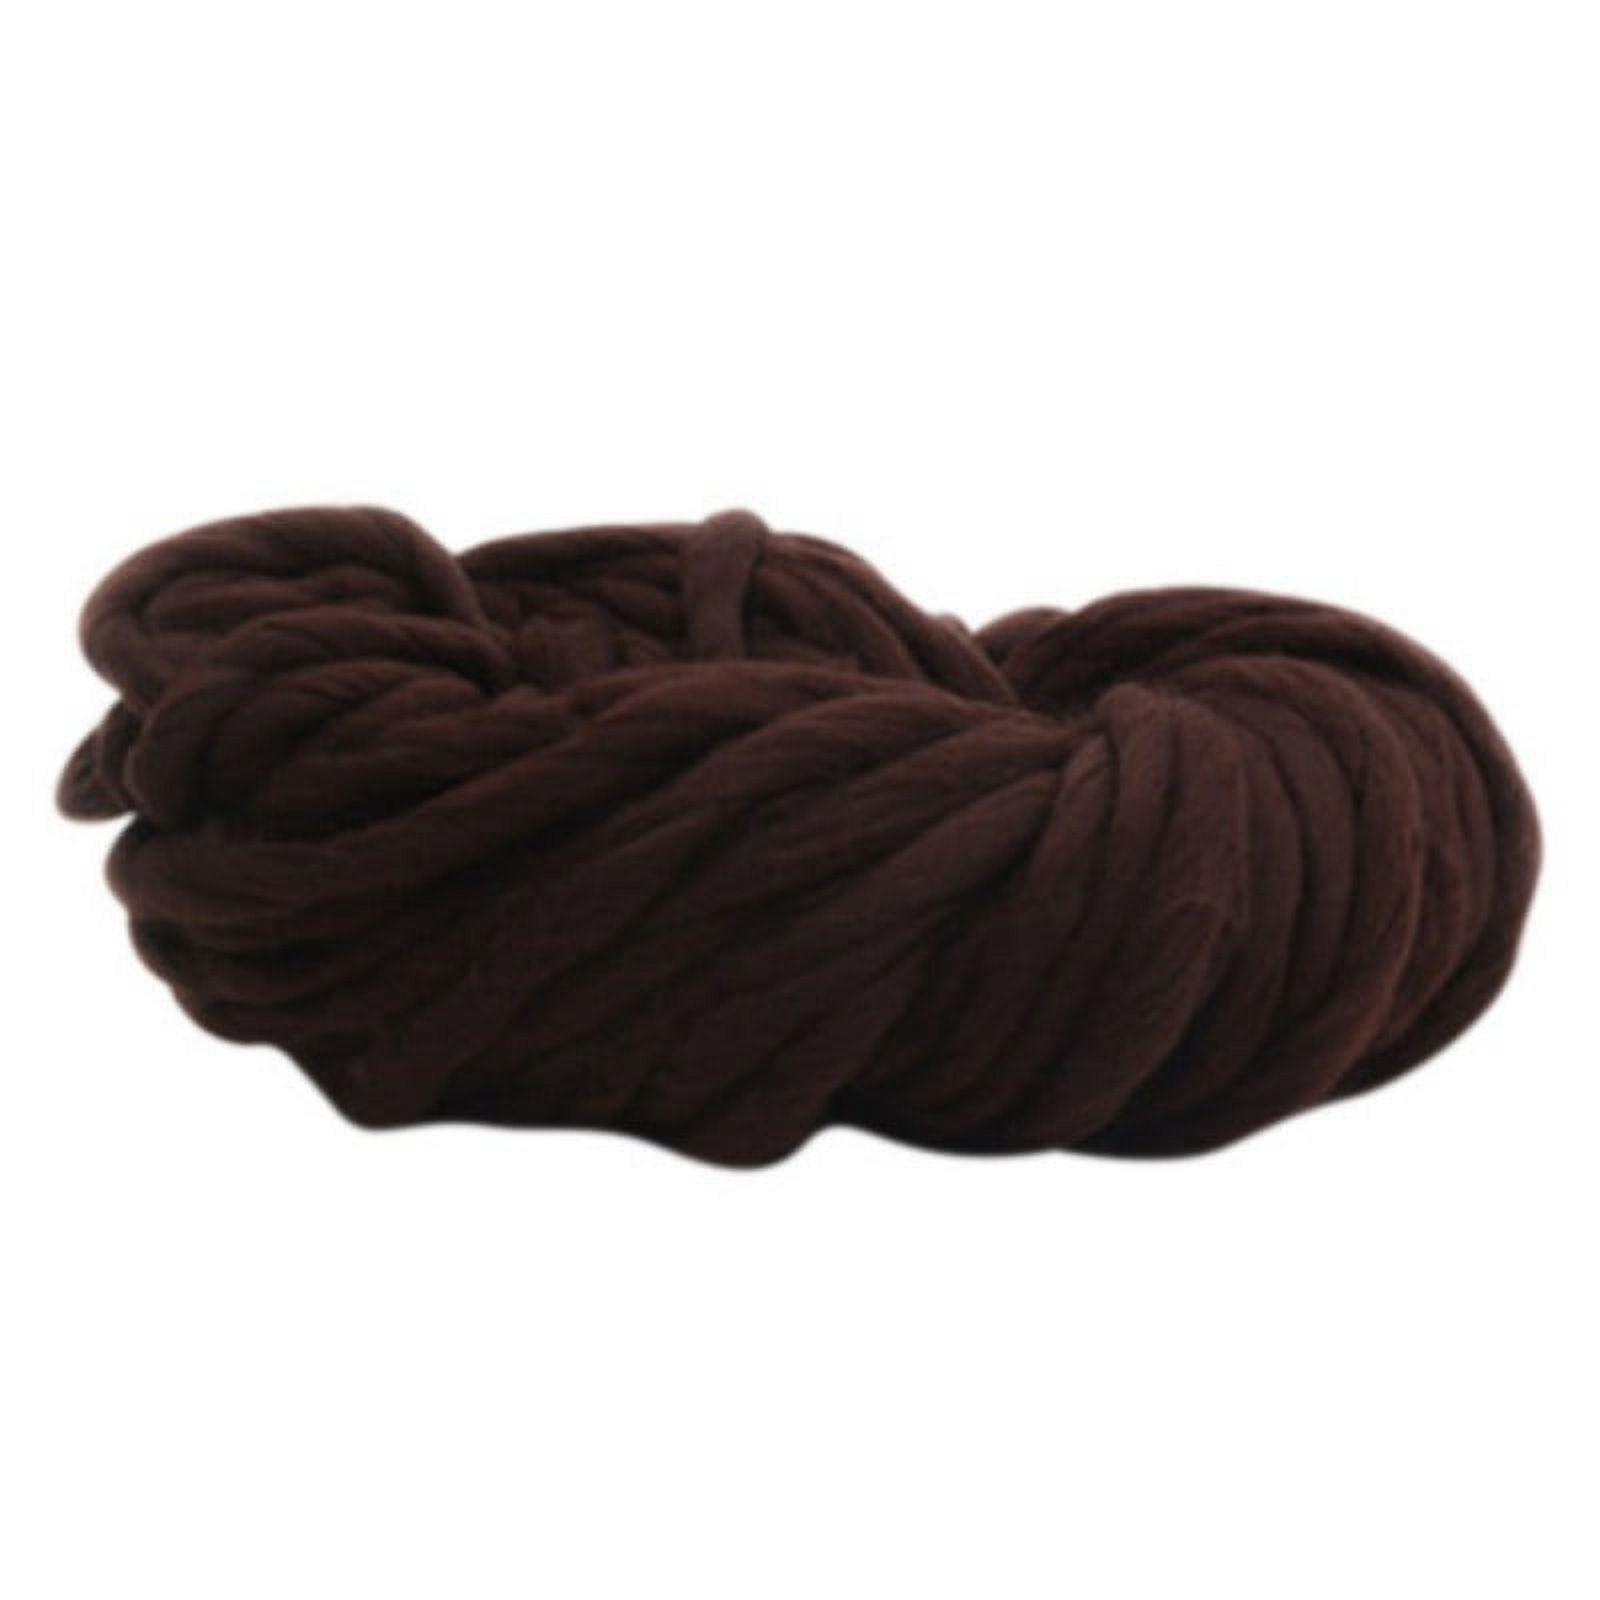 Chunky Wool Yarn Super Soft Thick Bulky Arm Knitting Roving DIY Crocheting  Yarn